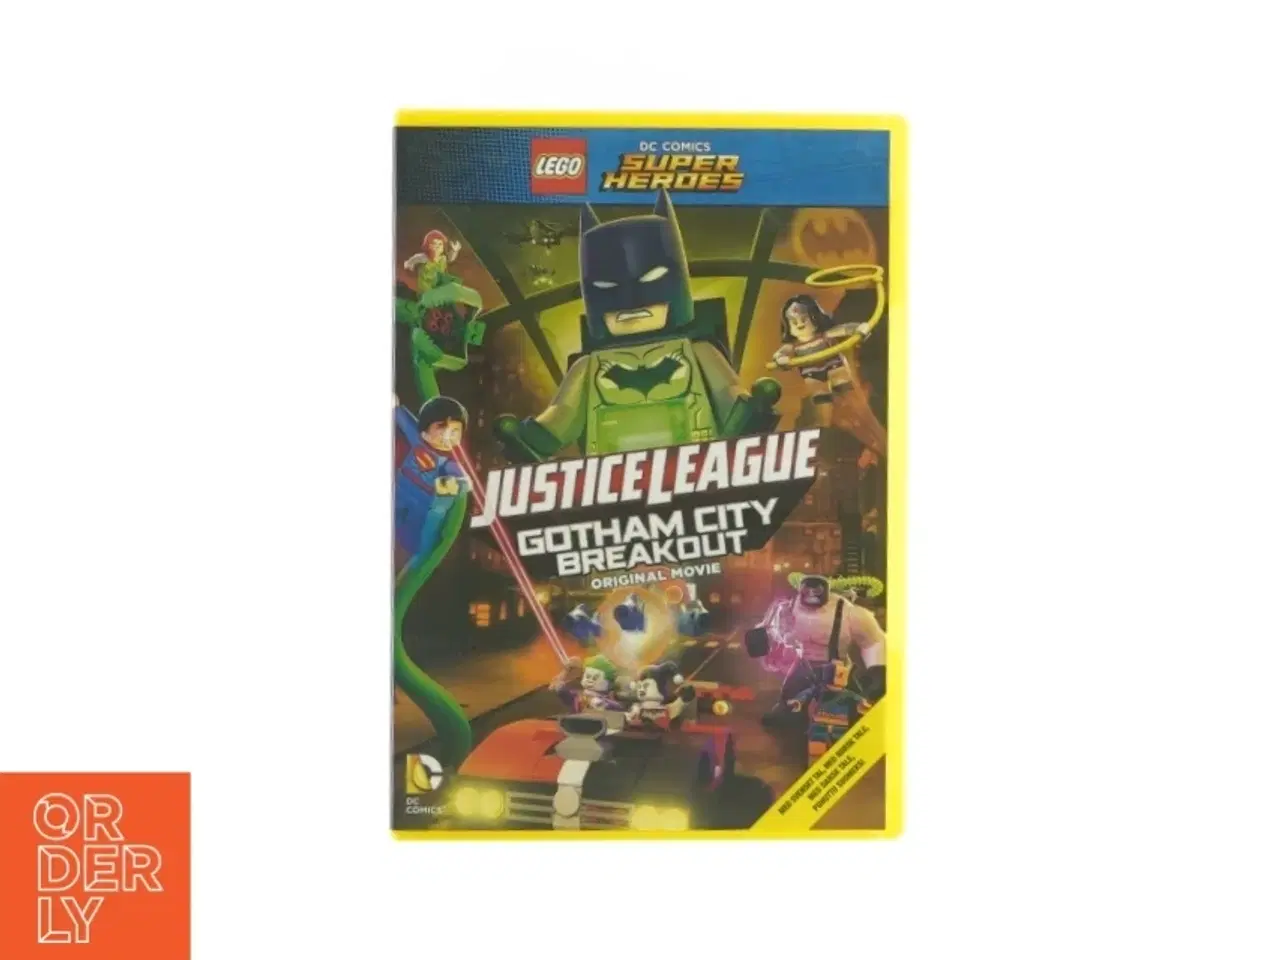 Billede 1 - Lego - Justice league, Gotham city breakout (DVD)